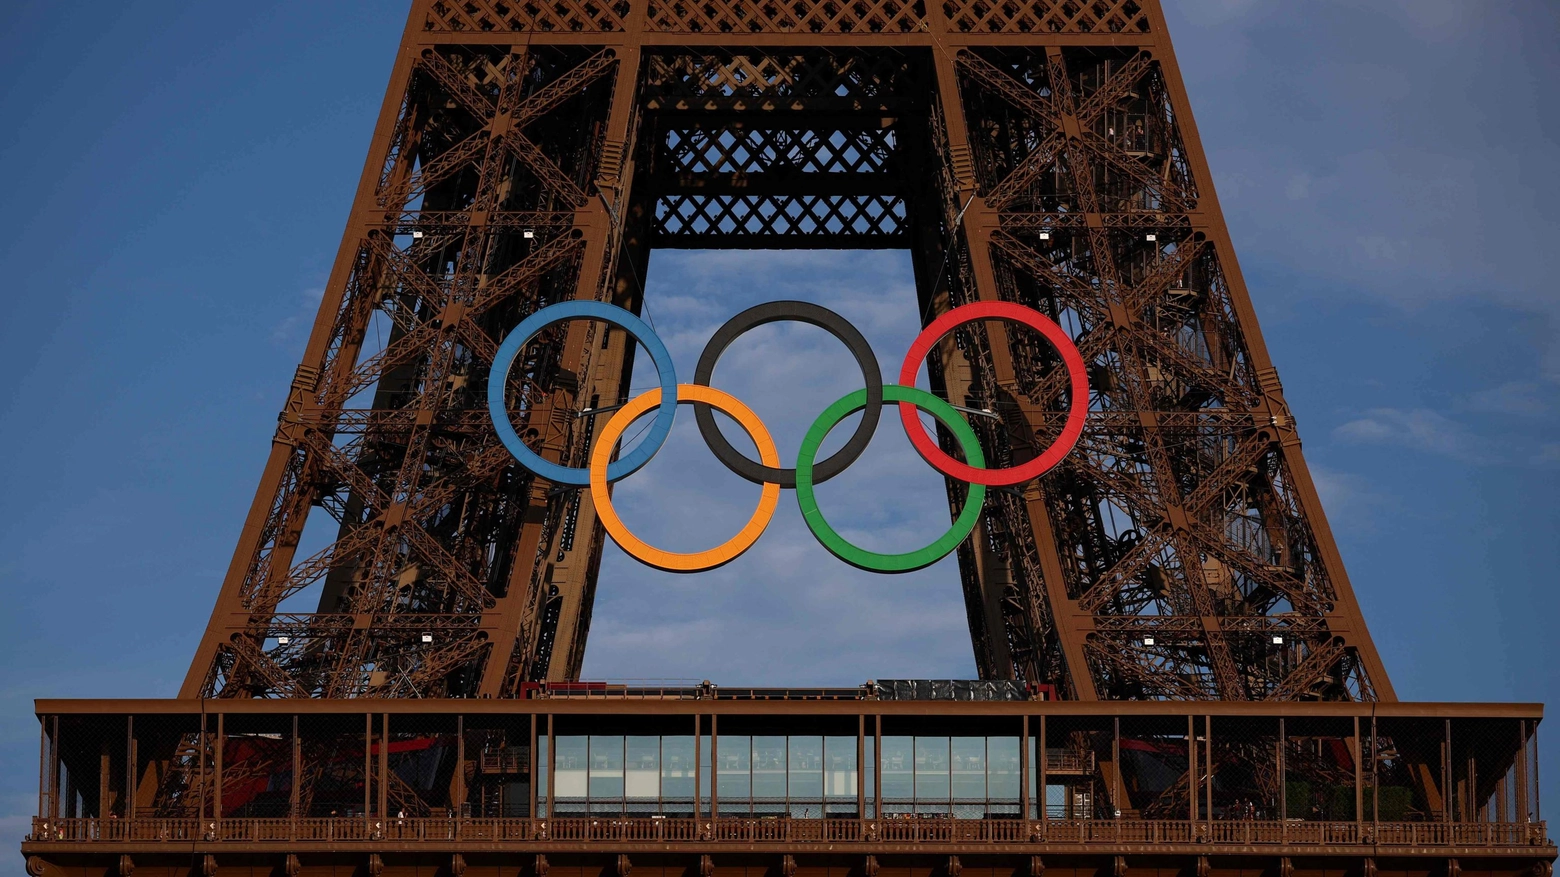 La Torre Eiffel "addobbata" per le Olimpiadi